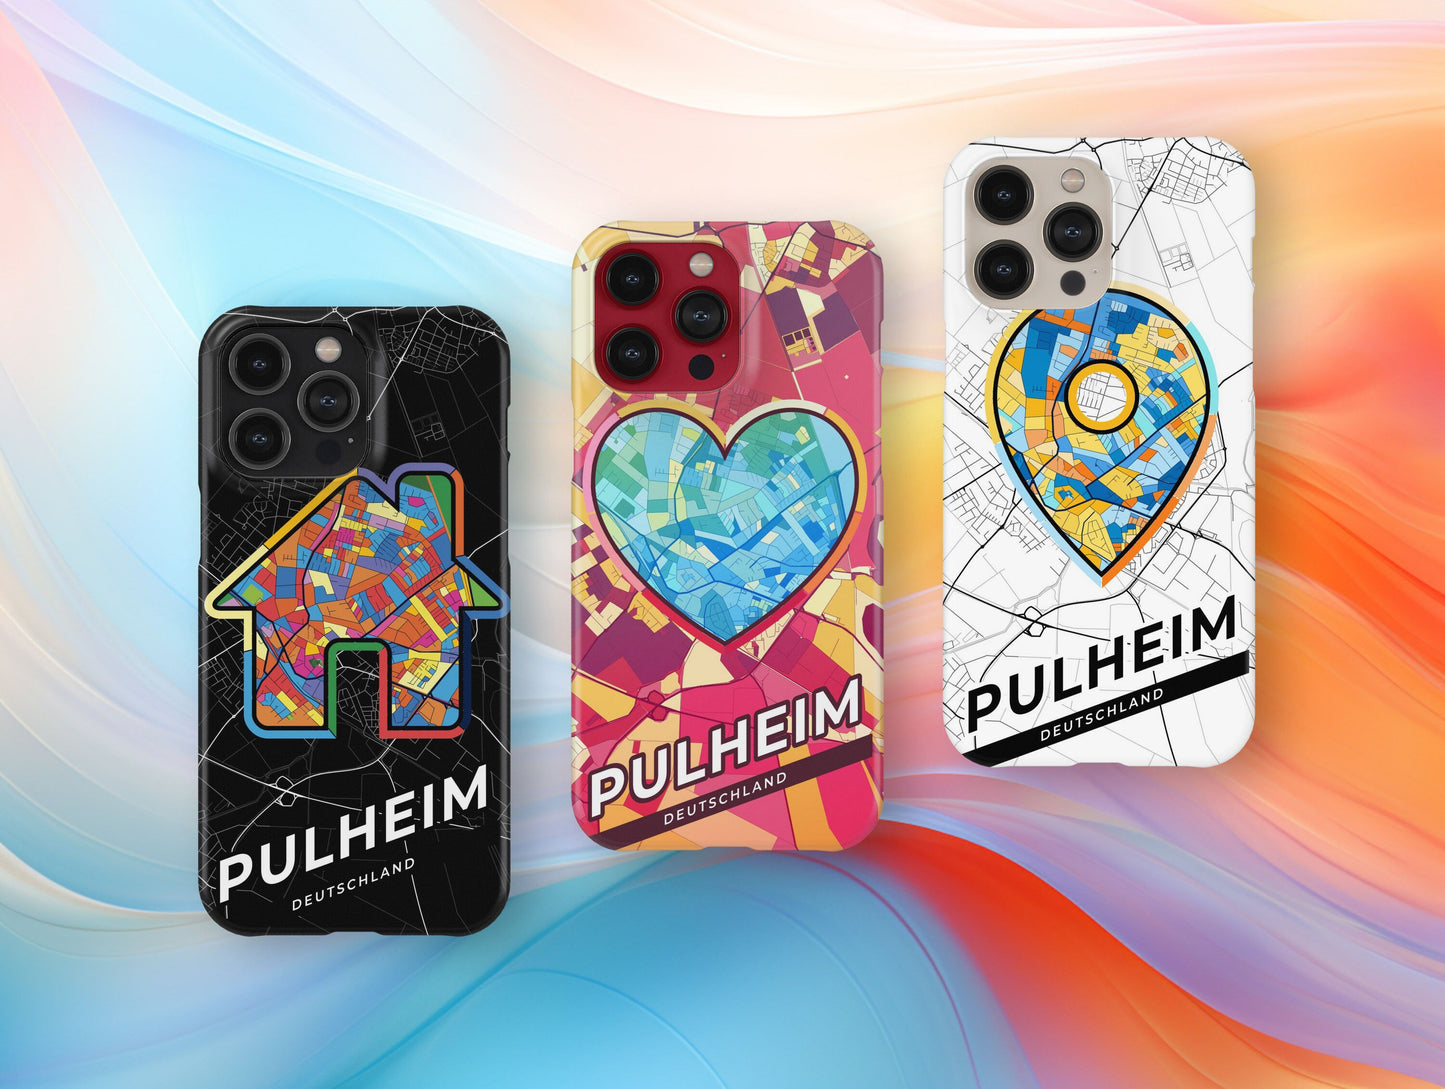 Pulheim Deutschland slim phone case with colorful icon. Birthday, wedding or housewarming gift. Couple match cases.